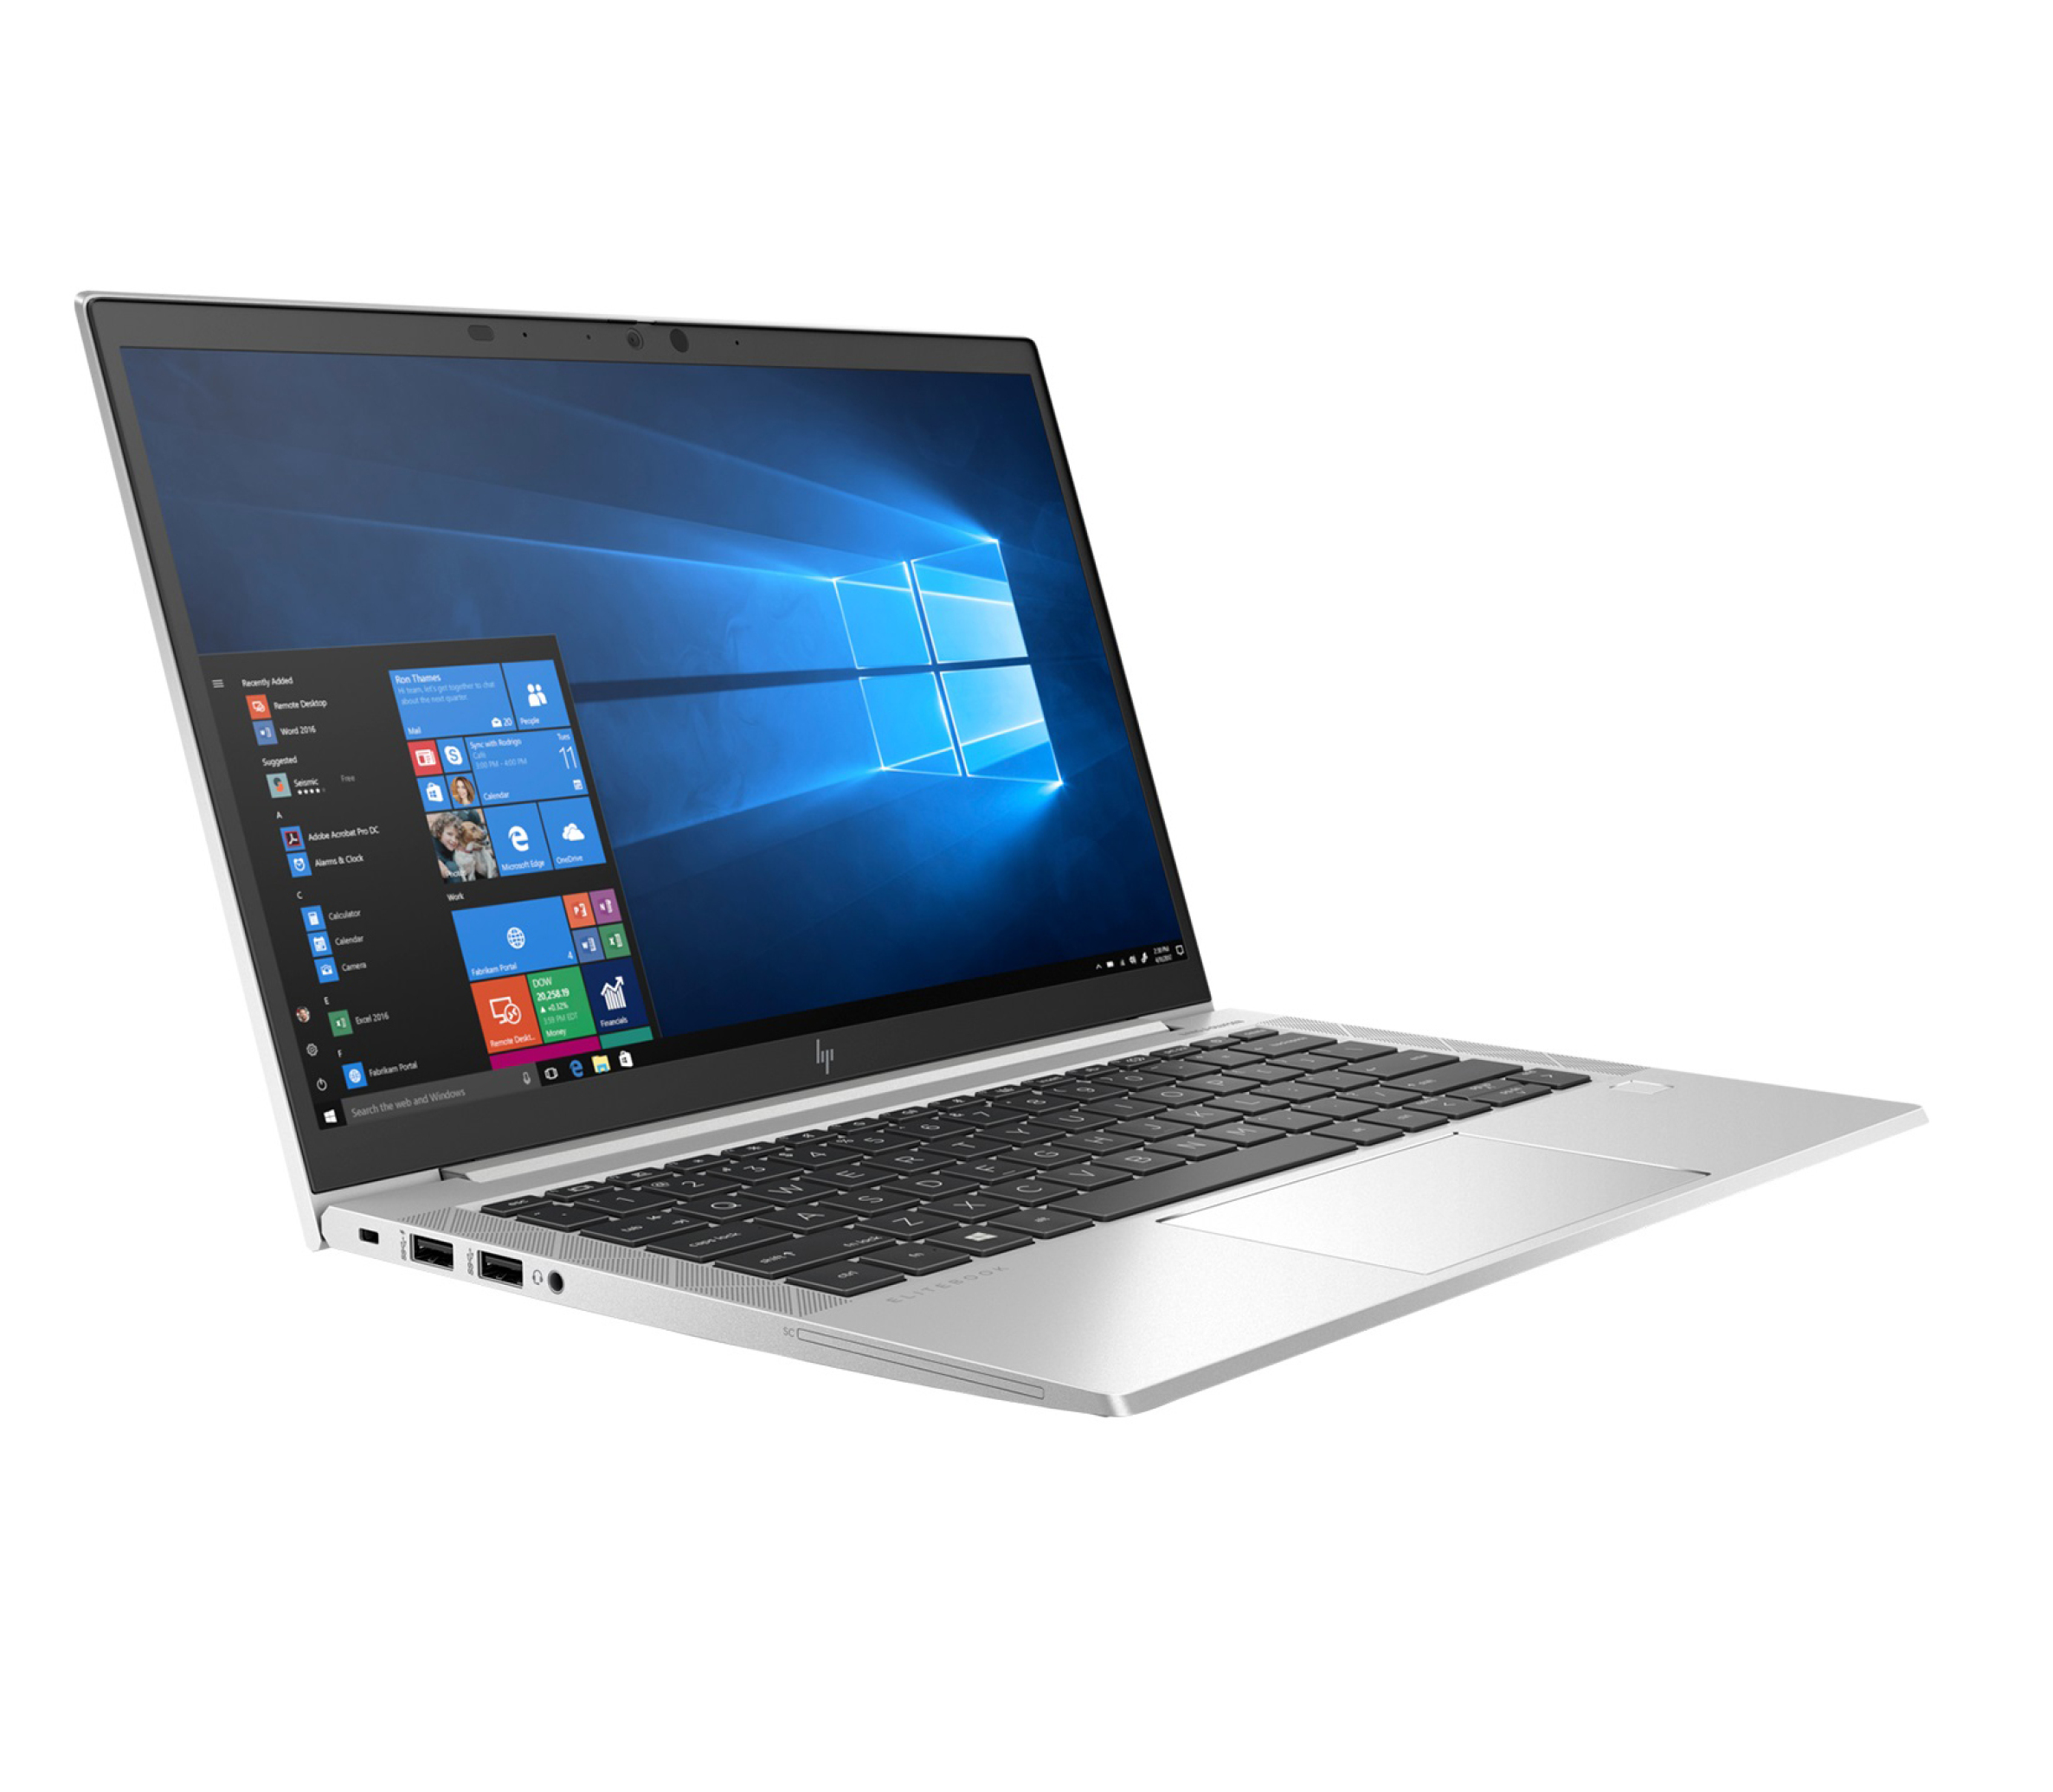  مشخصات فنی لپ تاپ HP EliteBook 830 G7 | لاکچری لپ تاپ 